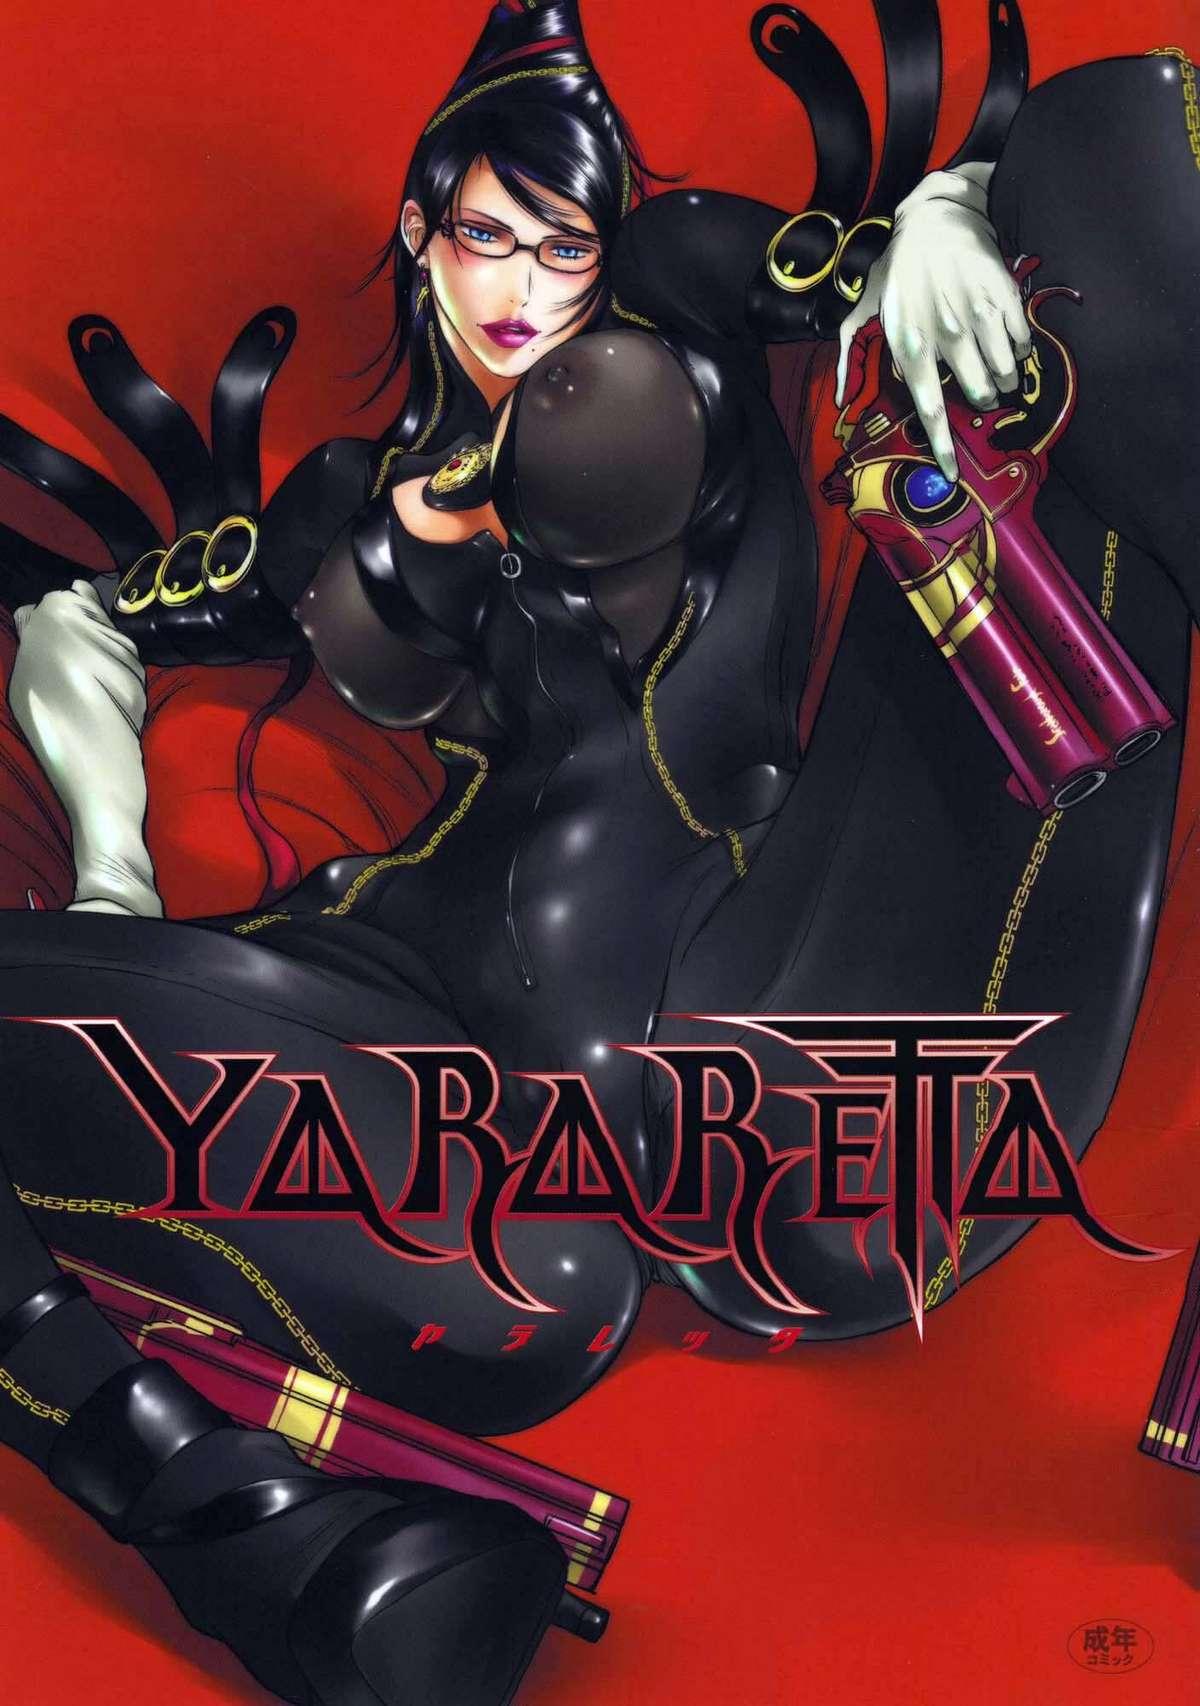 Magrinha YARARETTA - Bayonetta Extreme - Picture 1